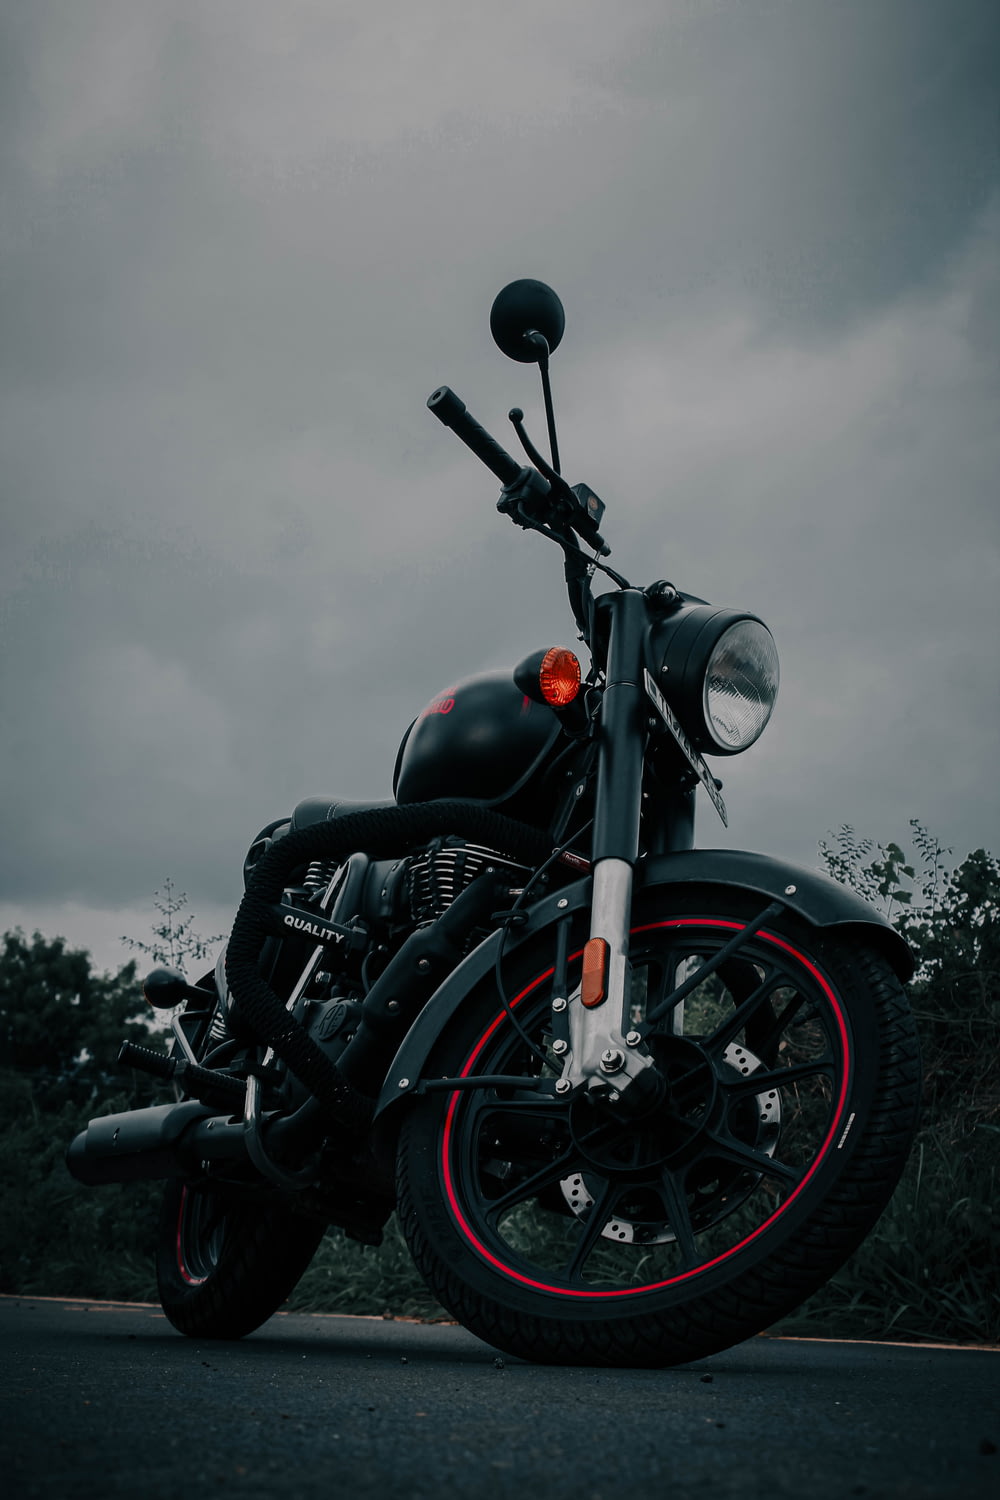 Motocicleta cruiser negra y plateada